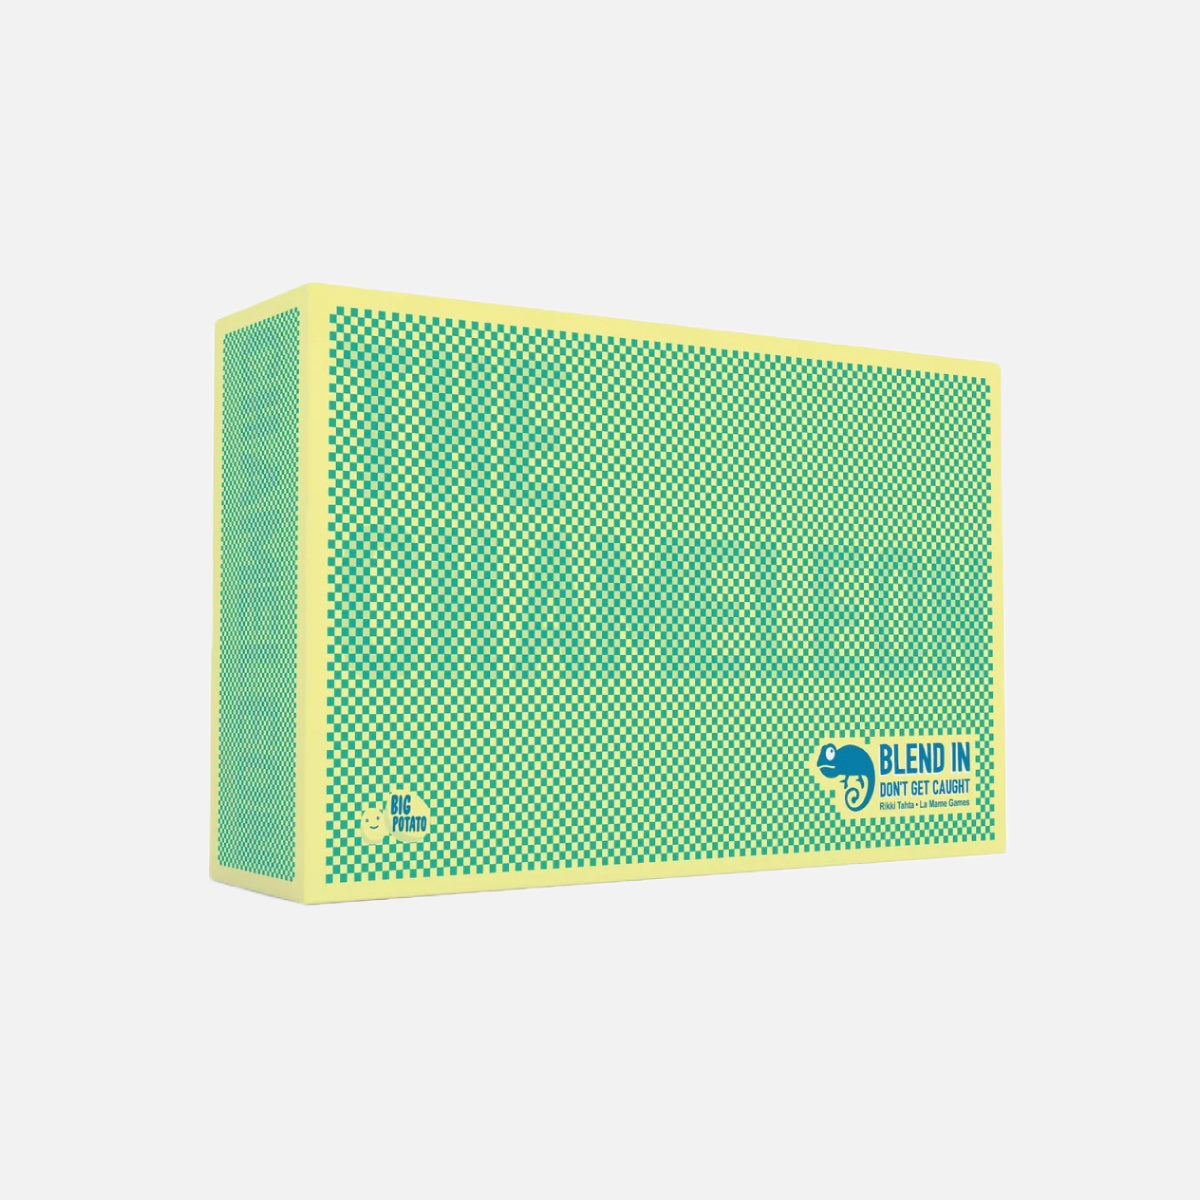 The Chameleon board game